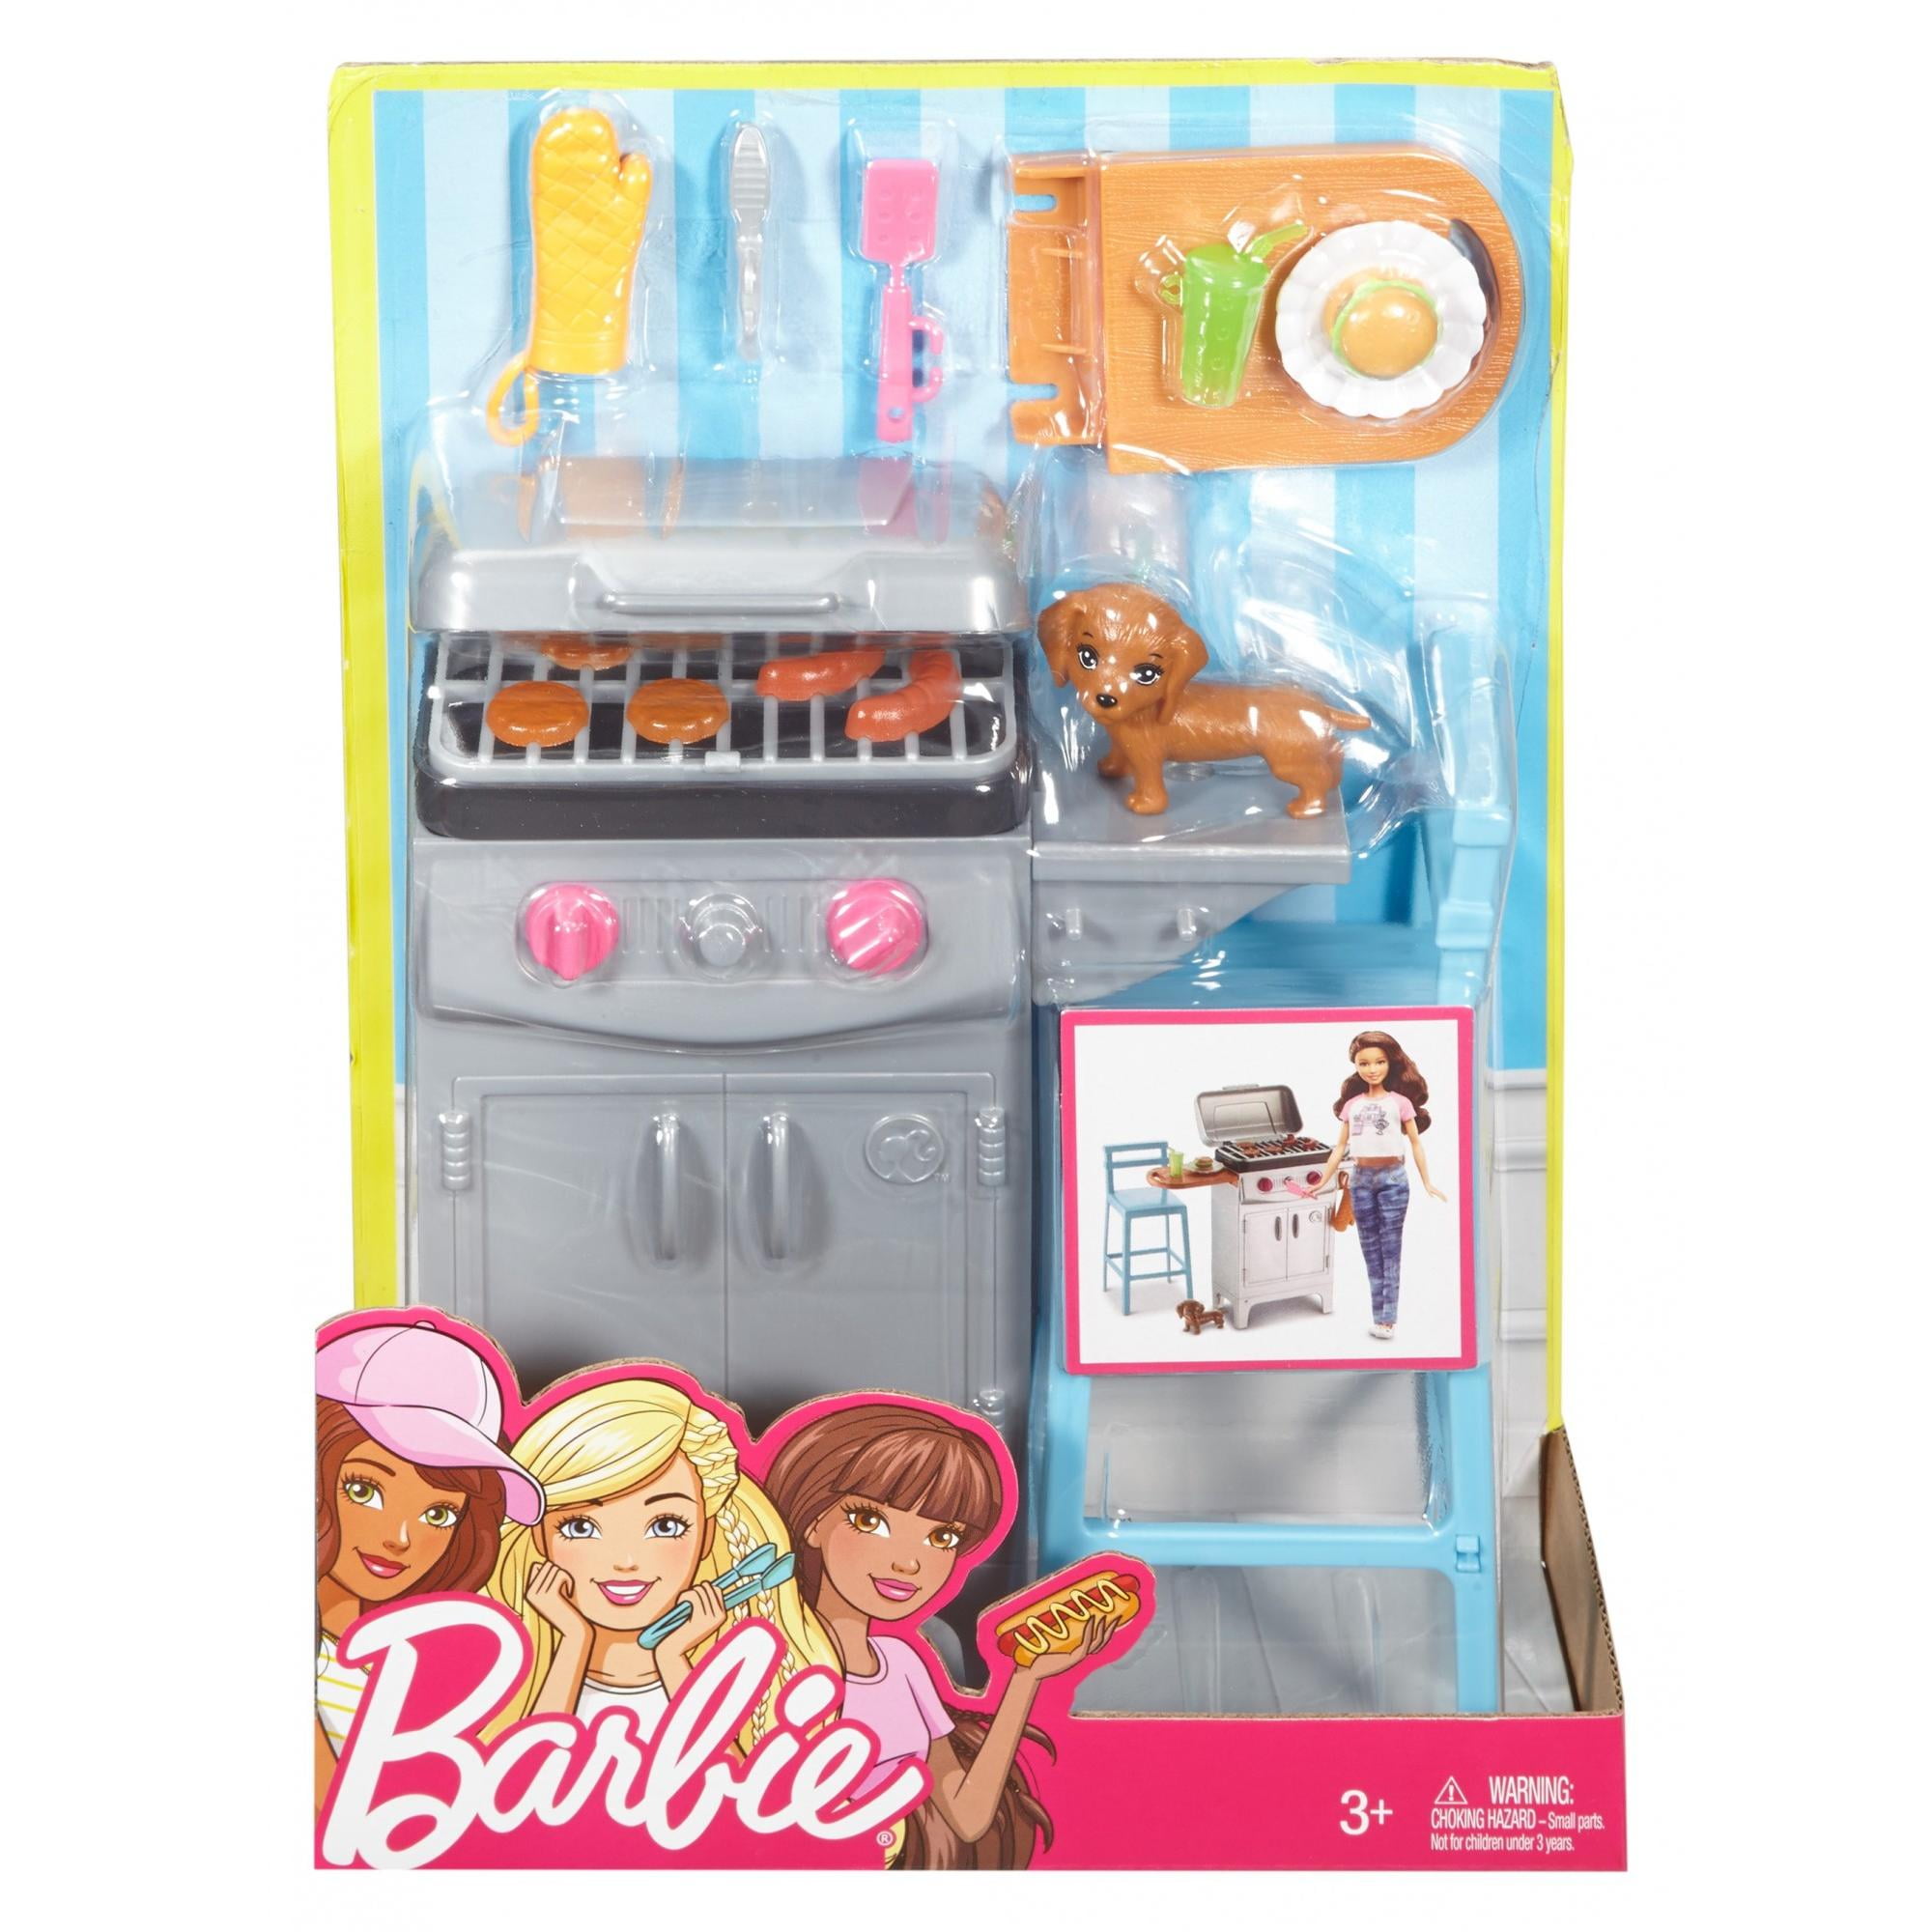 barbie barbecue